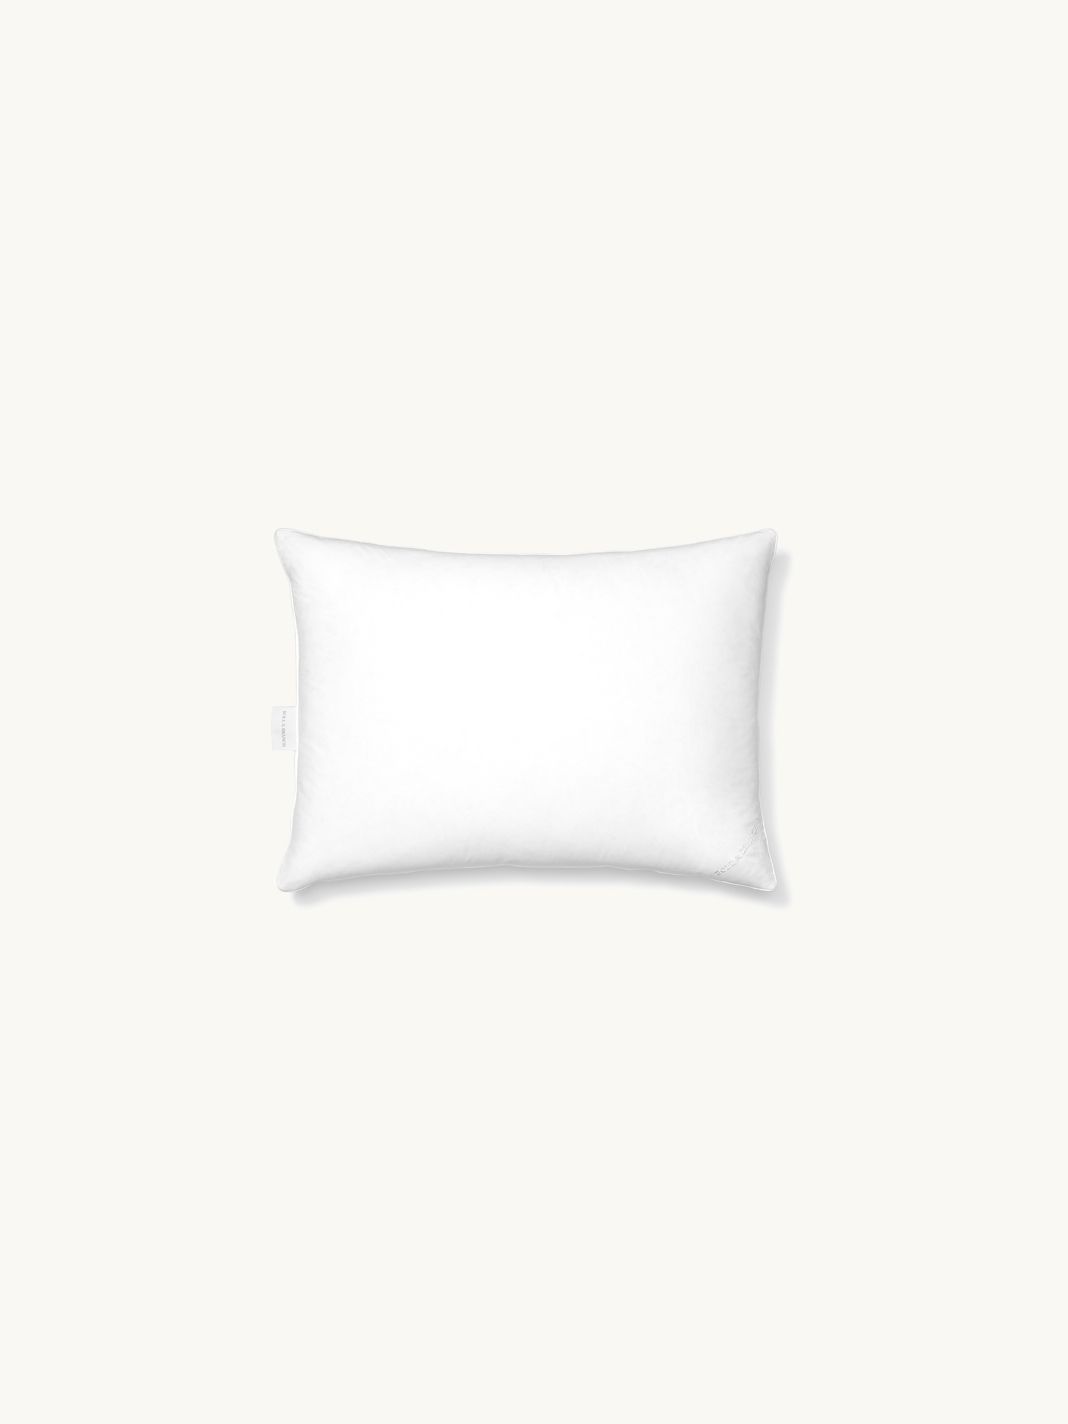 Down Pillow Insert - Responsibly Sourced, Organic - Boll & Branch | Boll & Branch